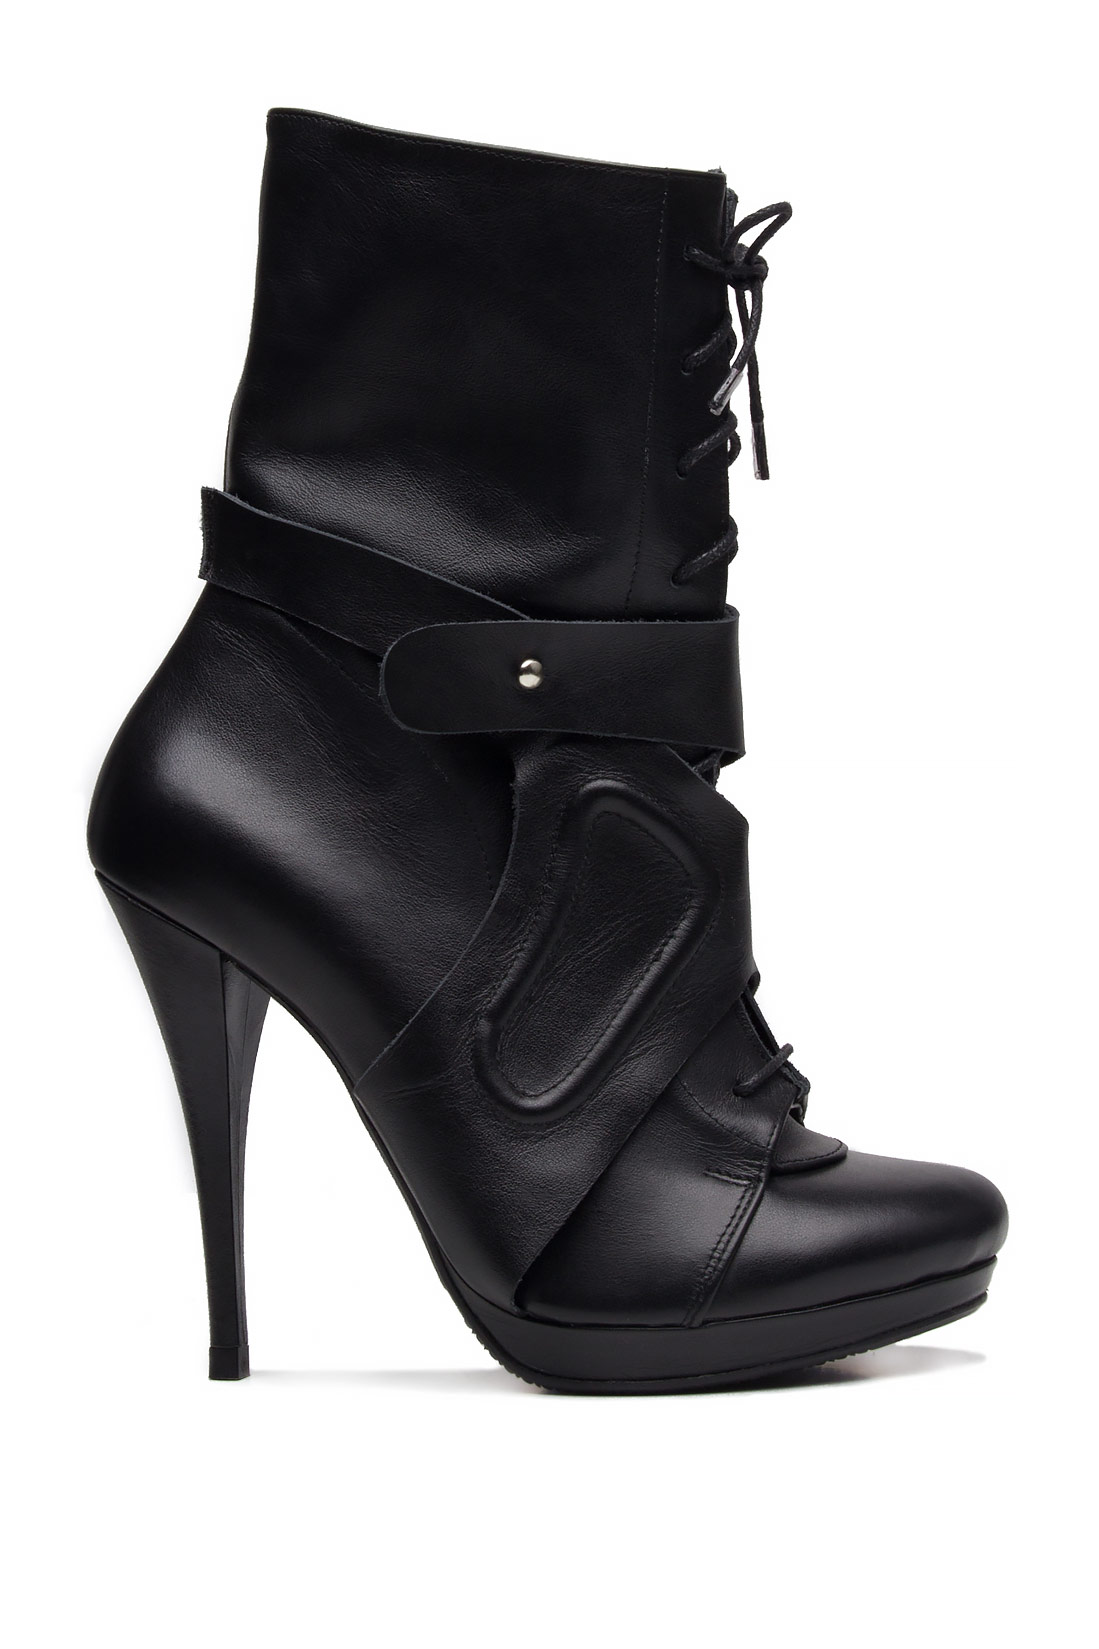 Lace-up leather ankle boots Mihaela Glavan  image 0